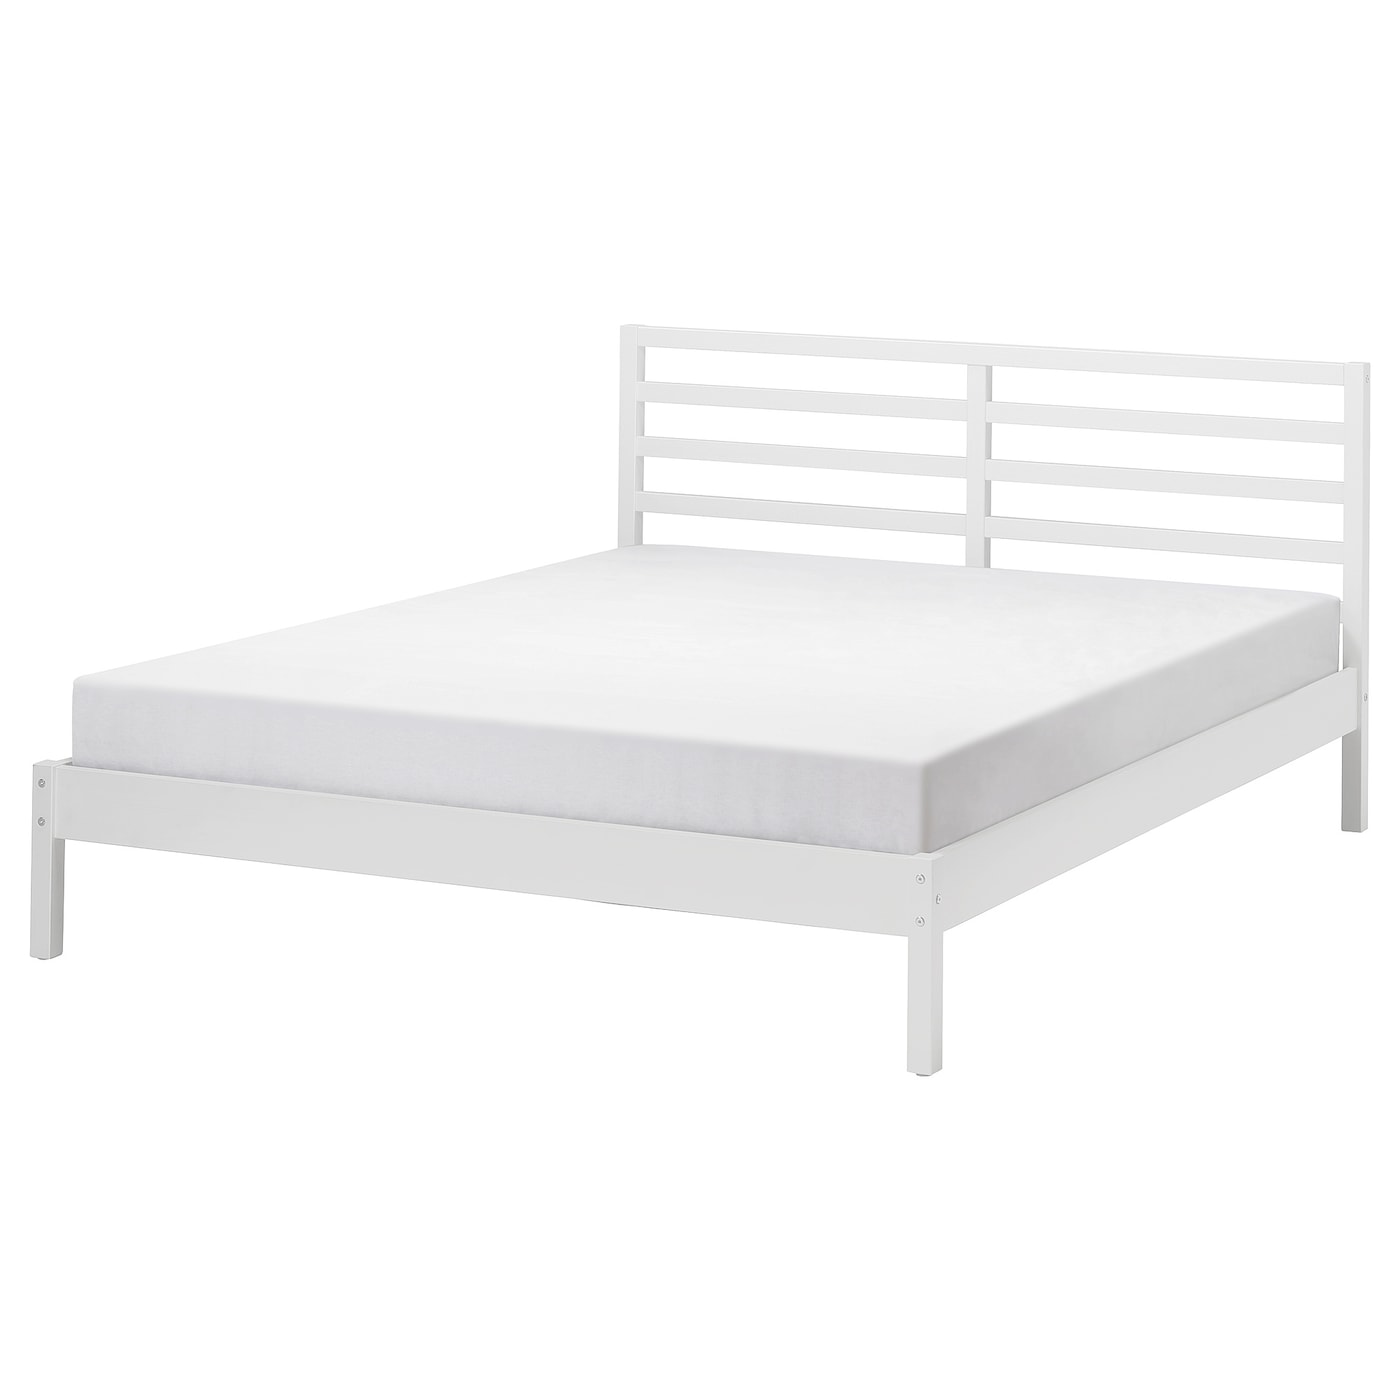 Каркас кровати - TARVA  IKEA/  ТАРВА ИКЕА,  209х148 см, белый